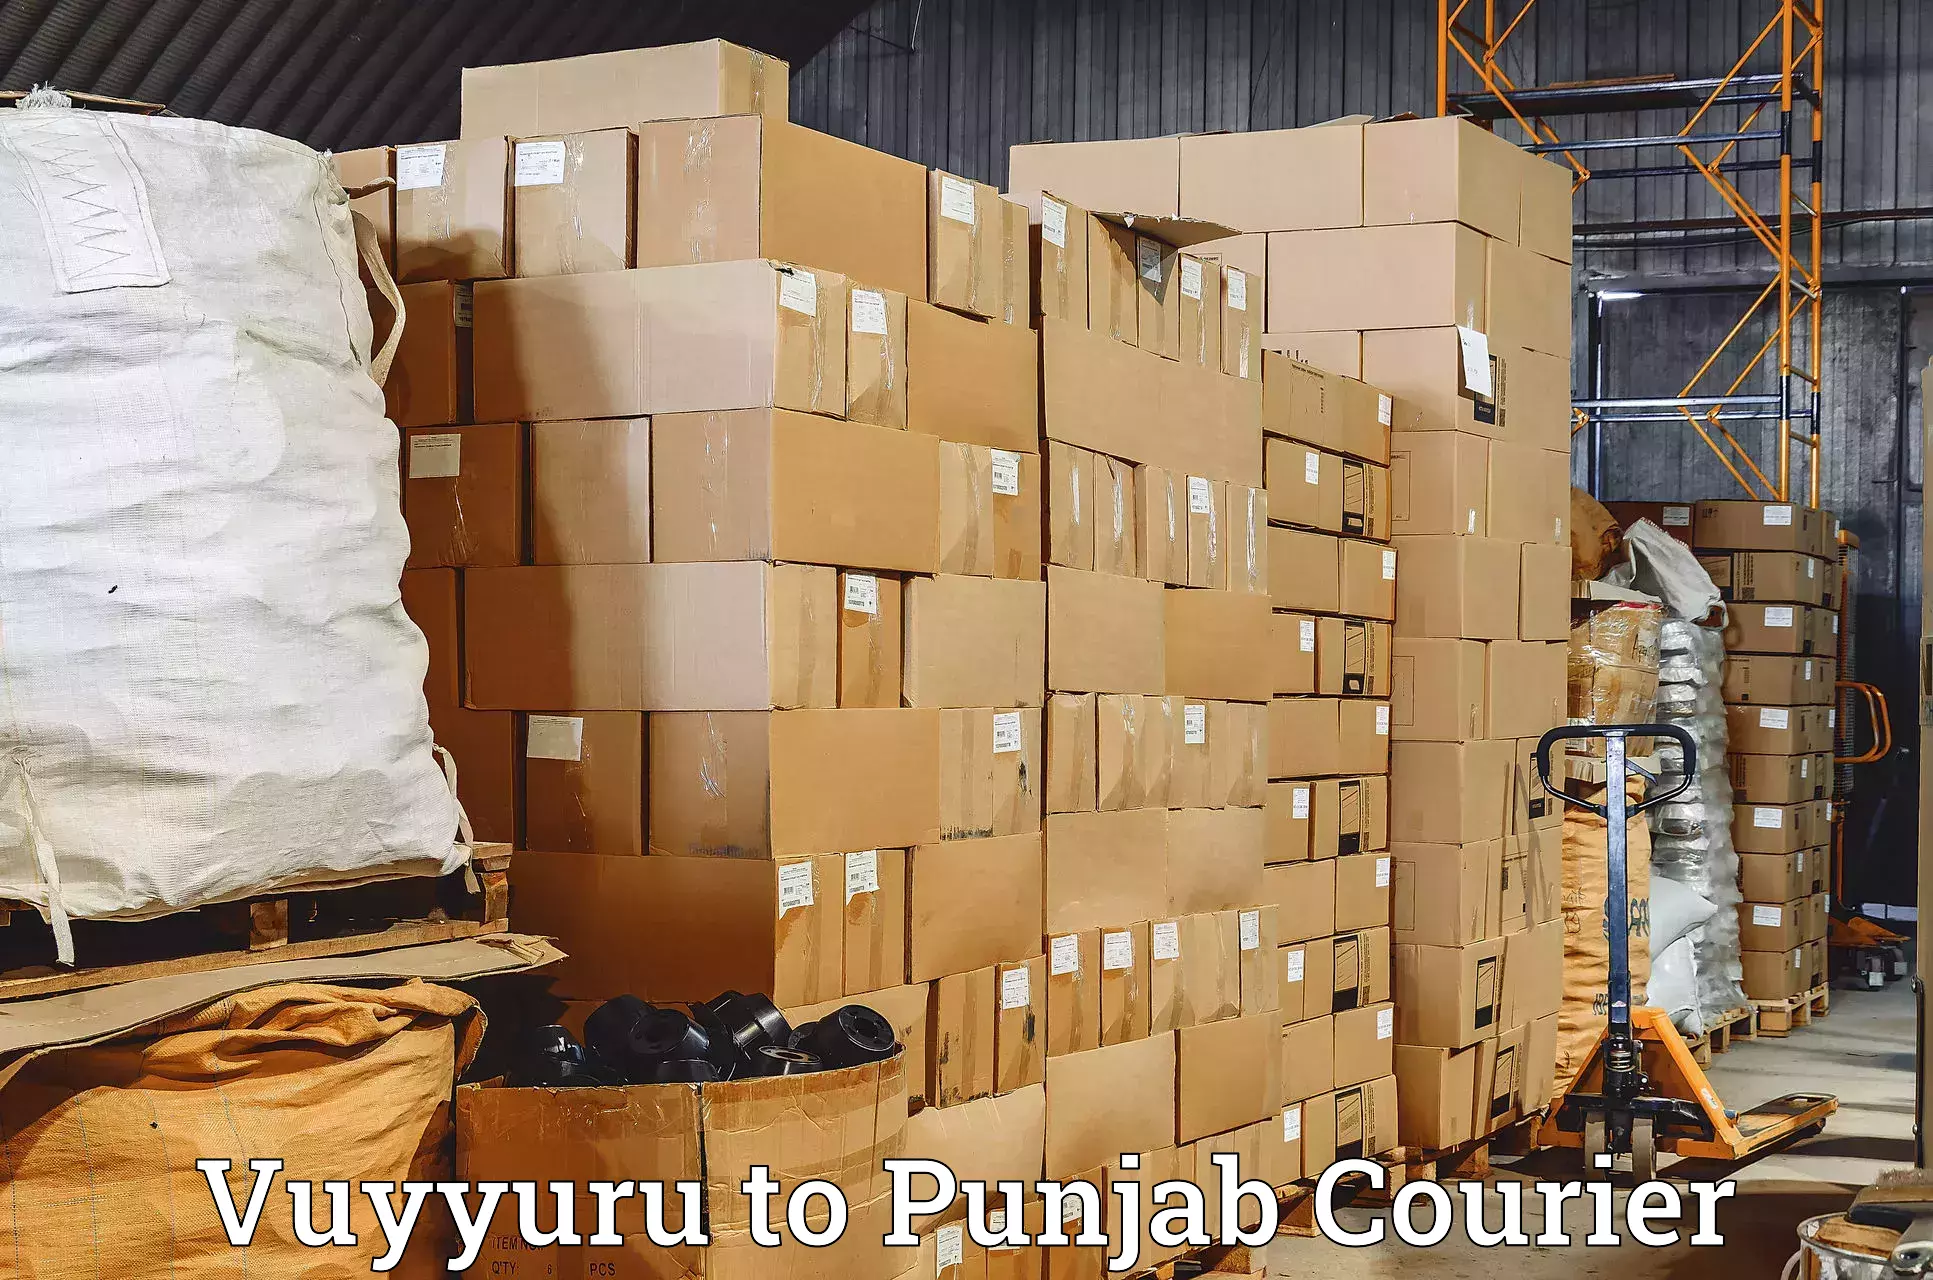 Courier service innovation Vuyyuru to Nawanshahr